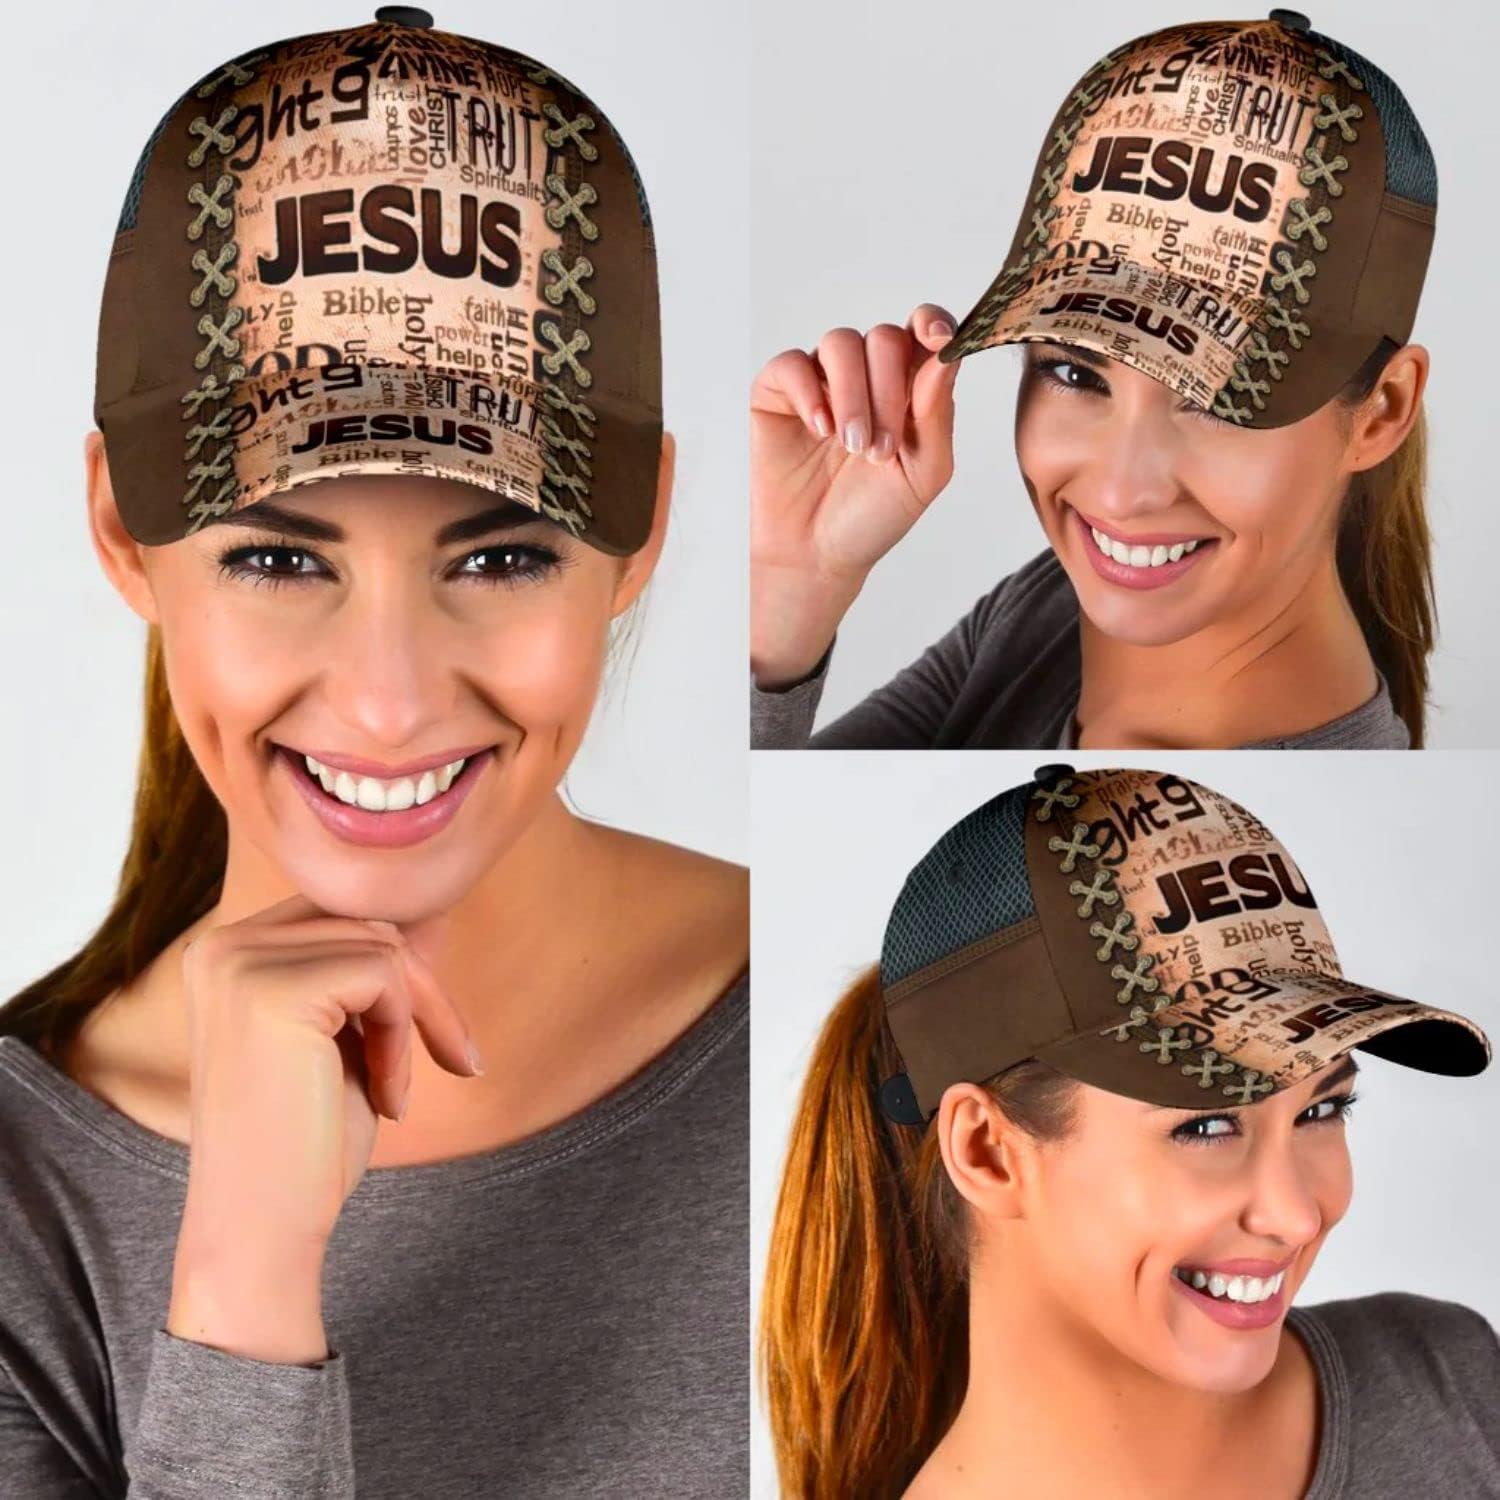 Jesus Bible Verse Holy Baseball Cap - Christian Hats for Men and Women